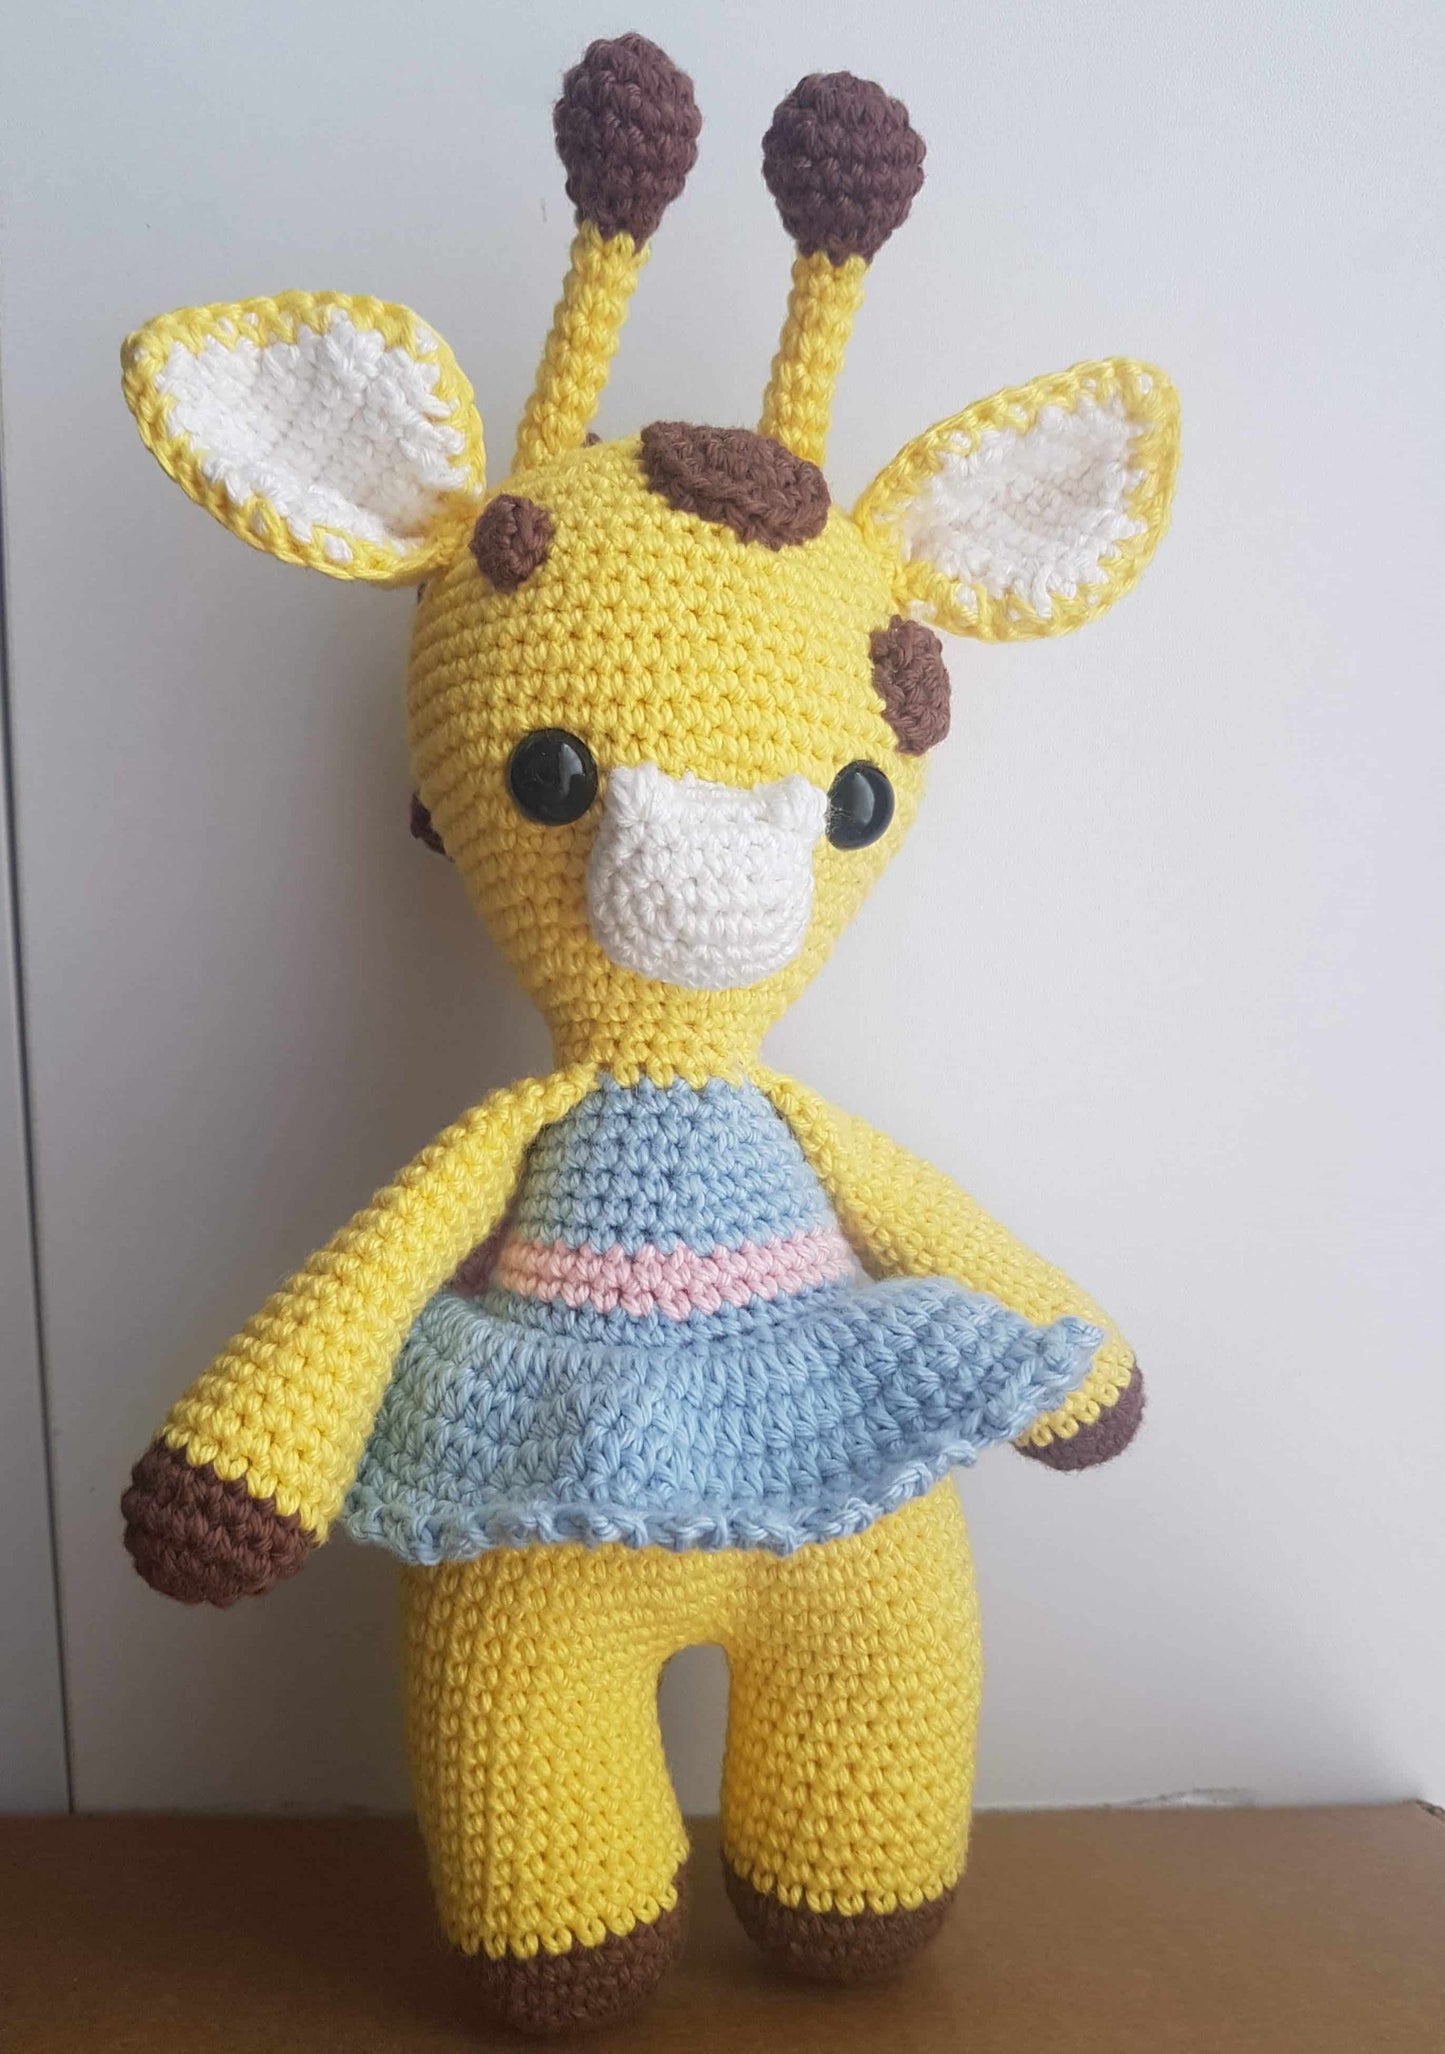 Gloria the Crocheted Giraffe